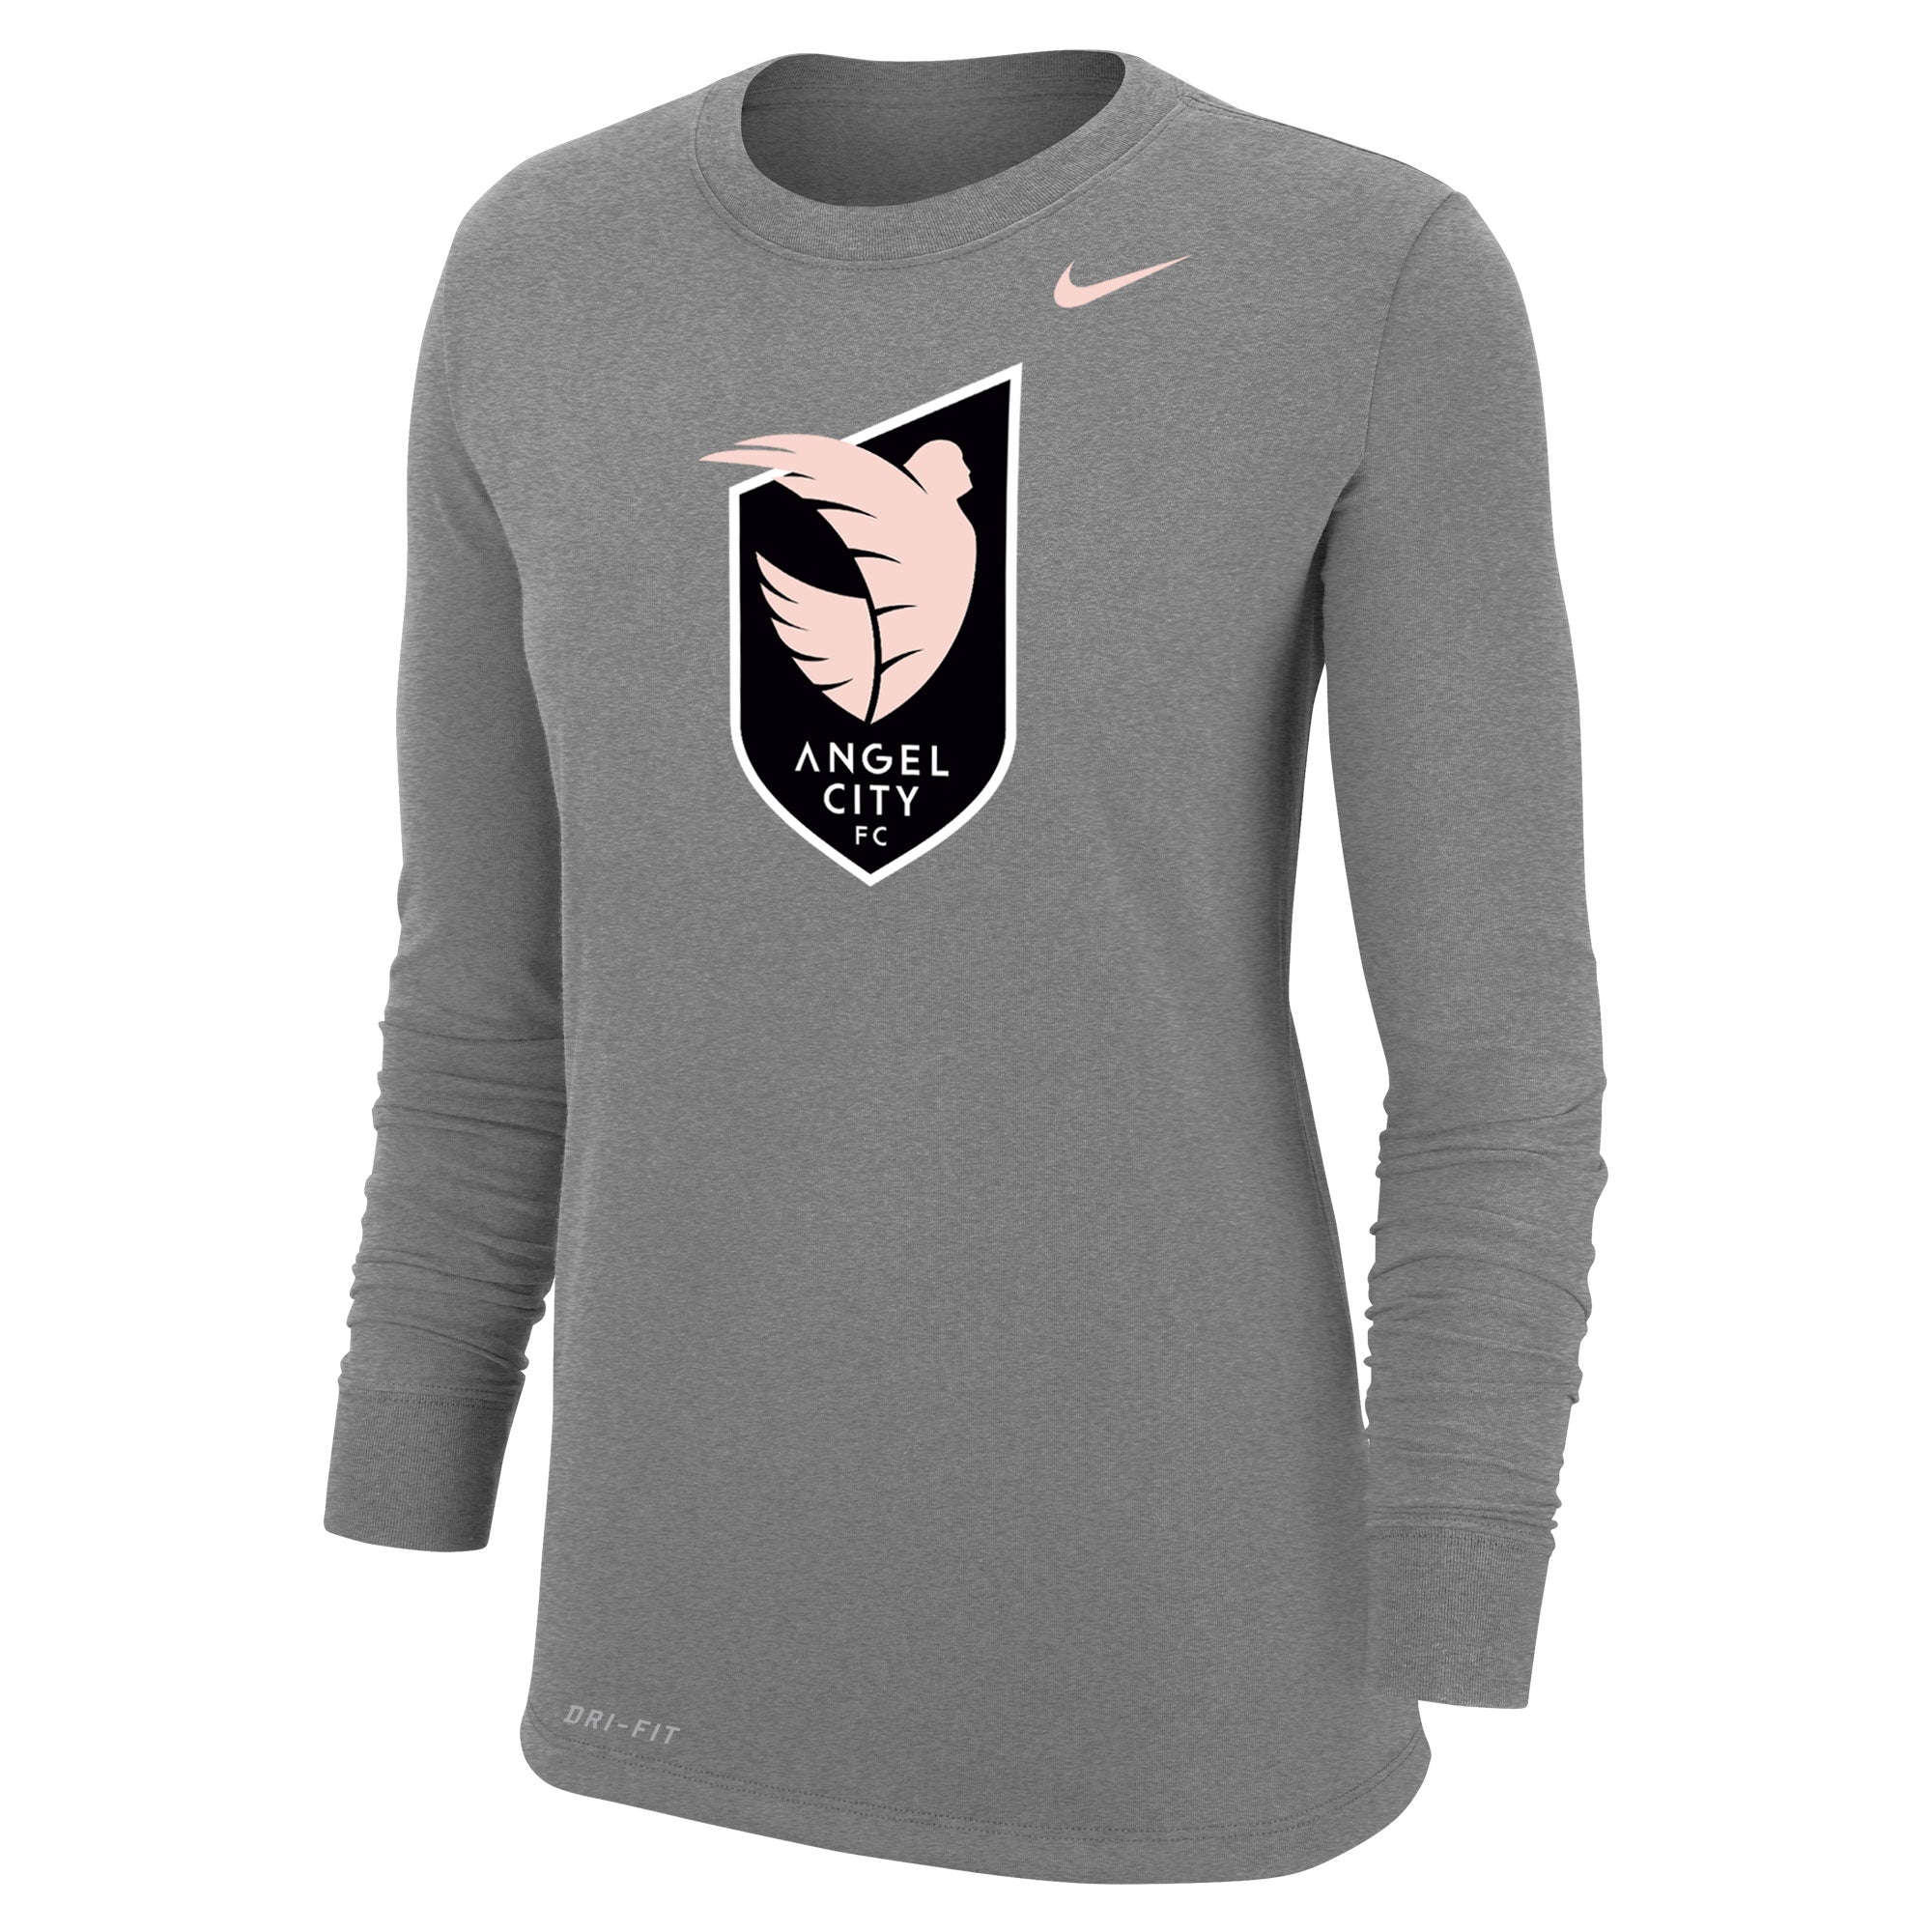 Camiseta Angel City FC Nike Dri-Fit Crest de manga larga para mujer, gris